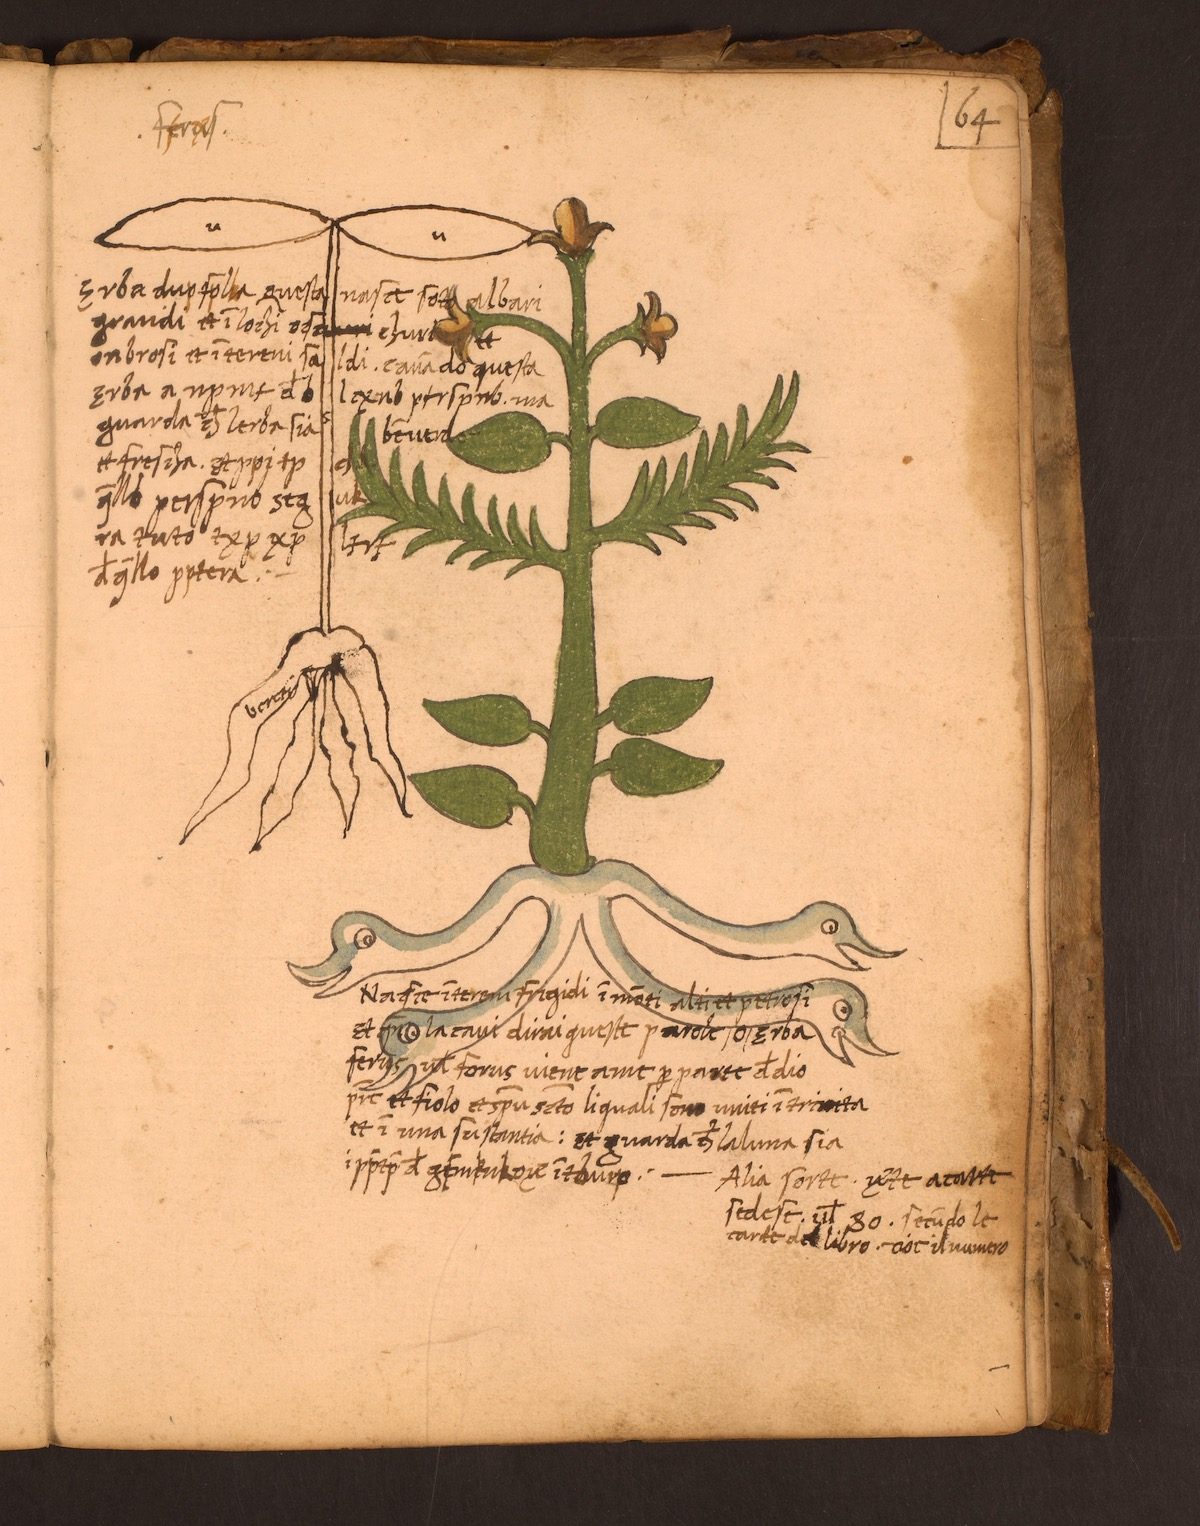 Erbario Italian herbal